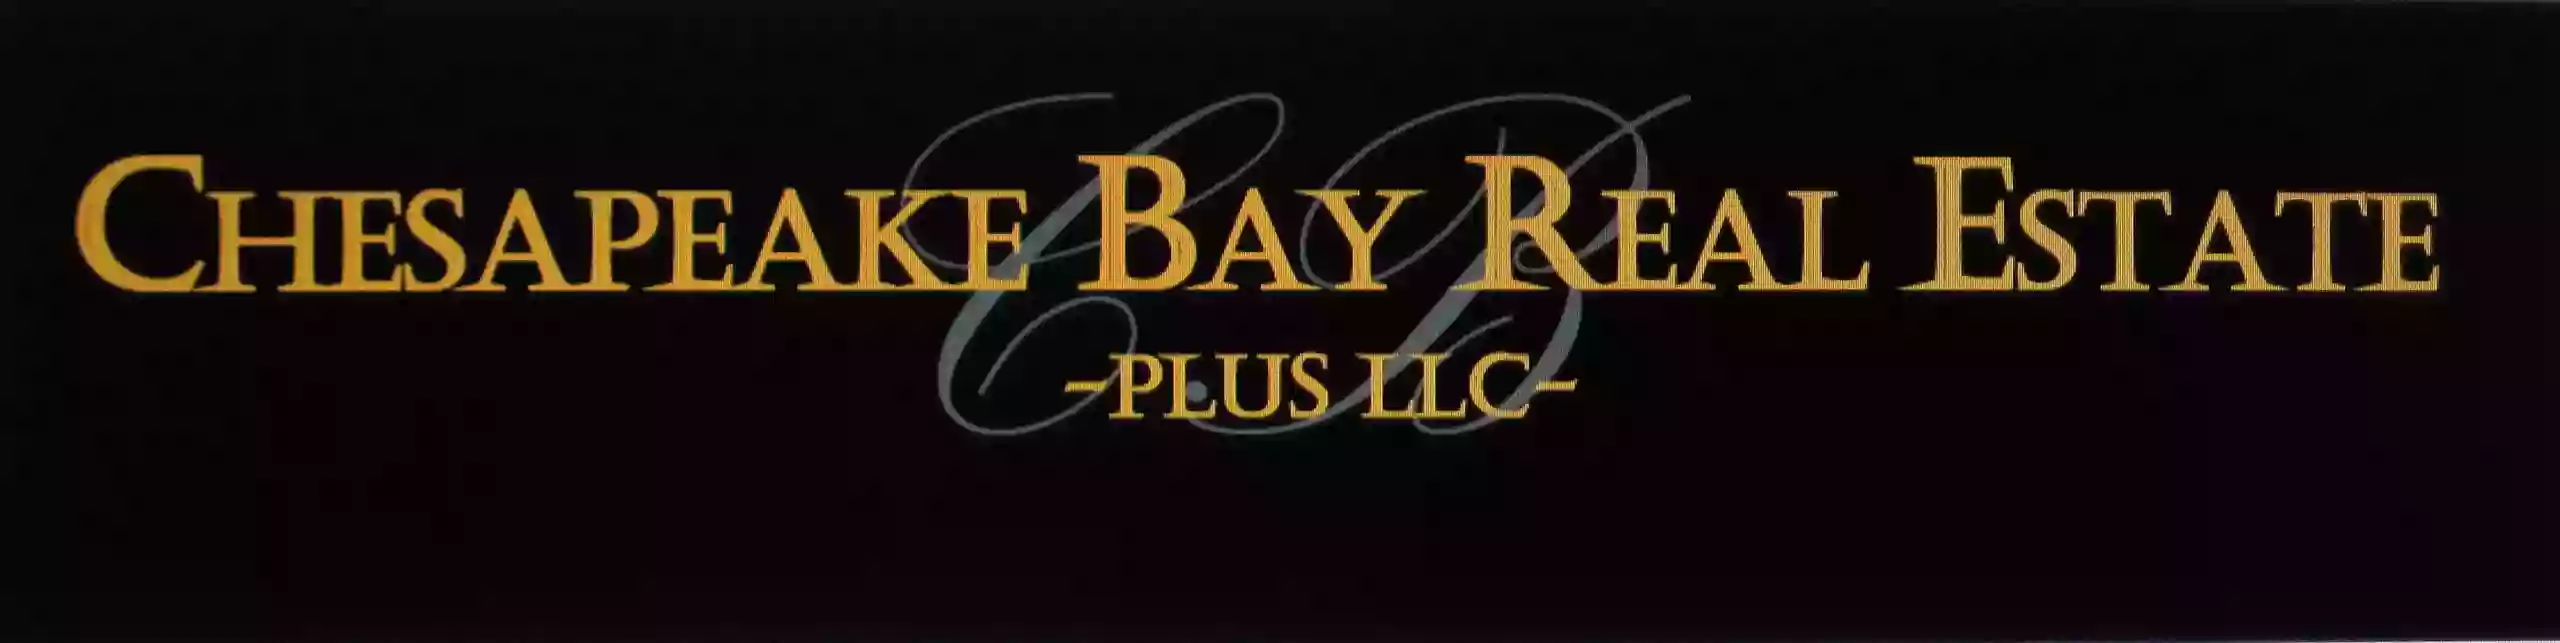 Chesapeake Bay Real Estate Plus